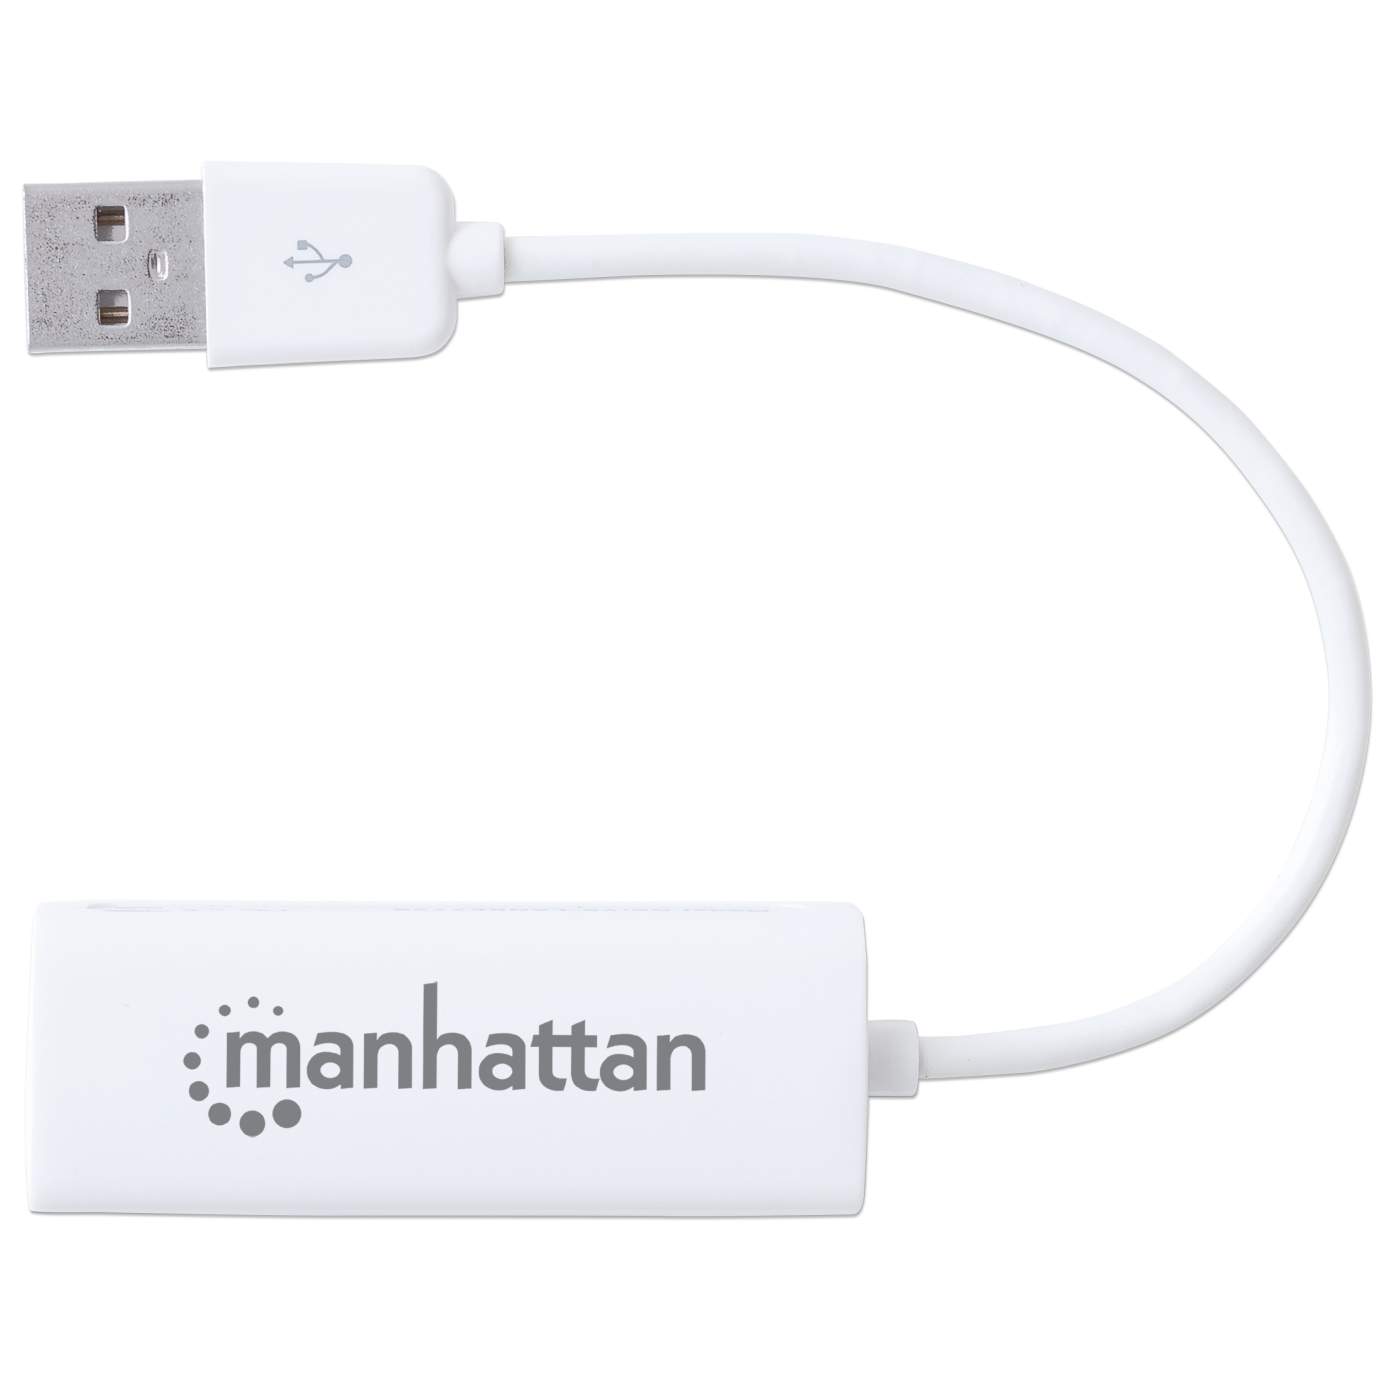 USB 2.0 Fast Ethernet Adapter Image 5